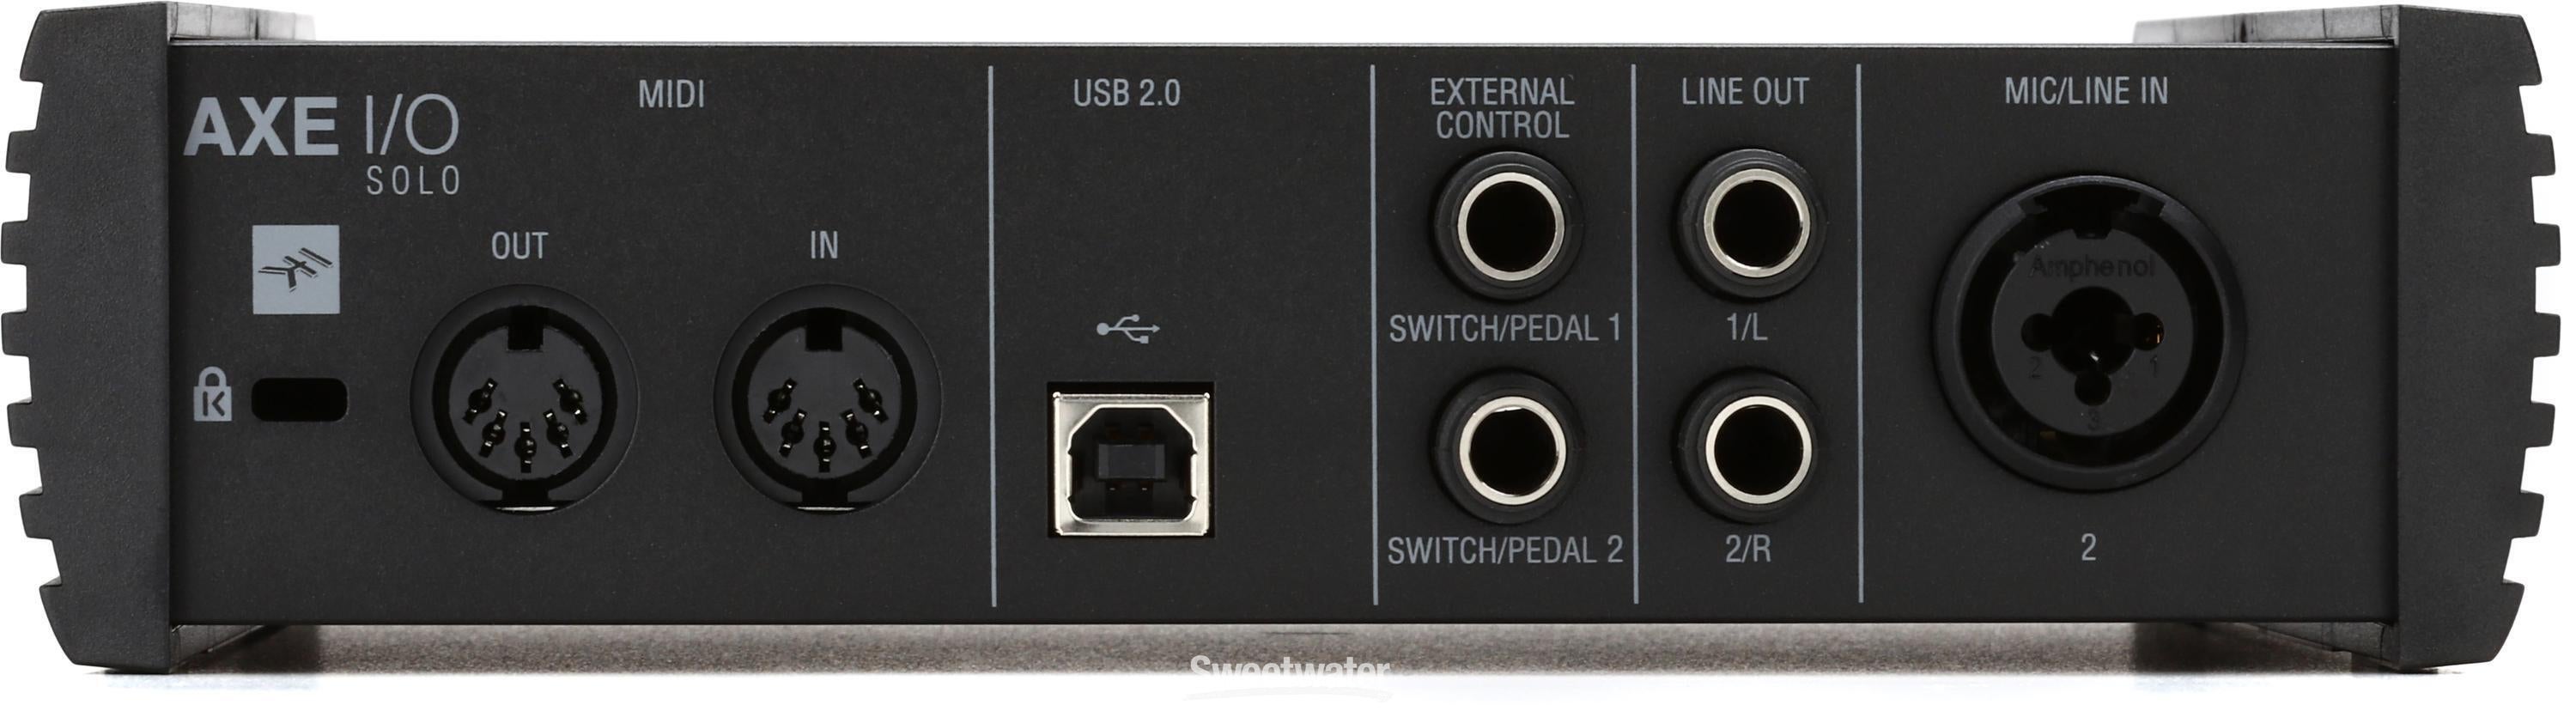 IK Multimedia AXE I/O SOLO 2x3 USB Guitar Audio Interface Reviews ...